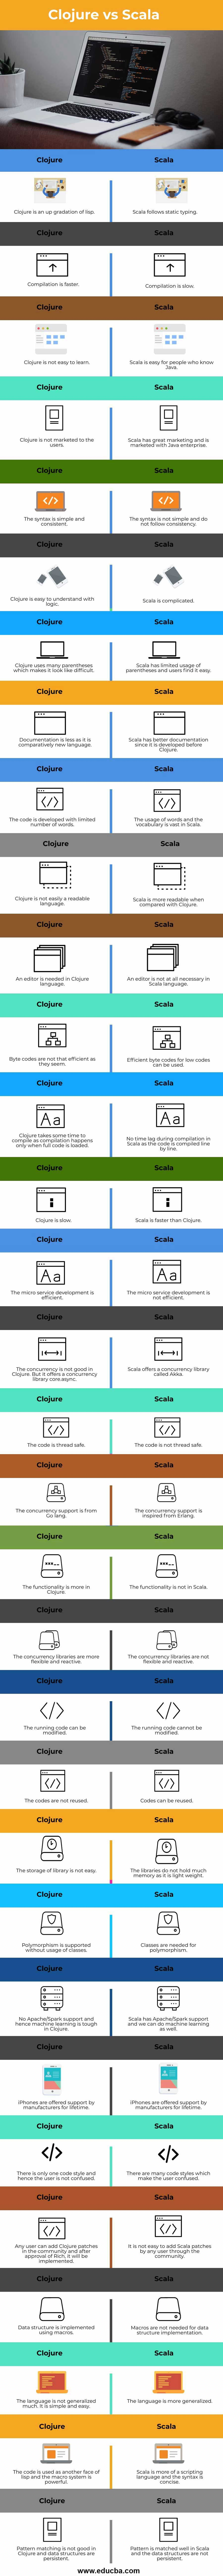 Clojure-vs-Scala-info